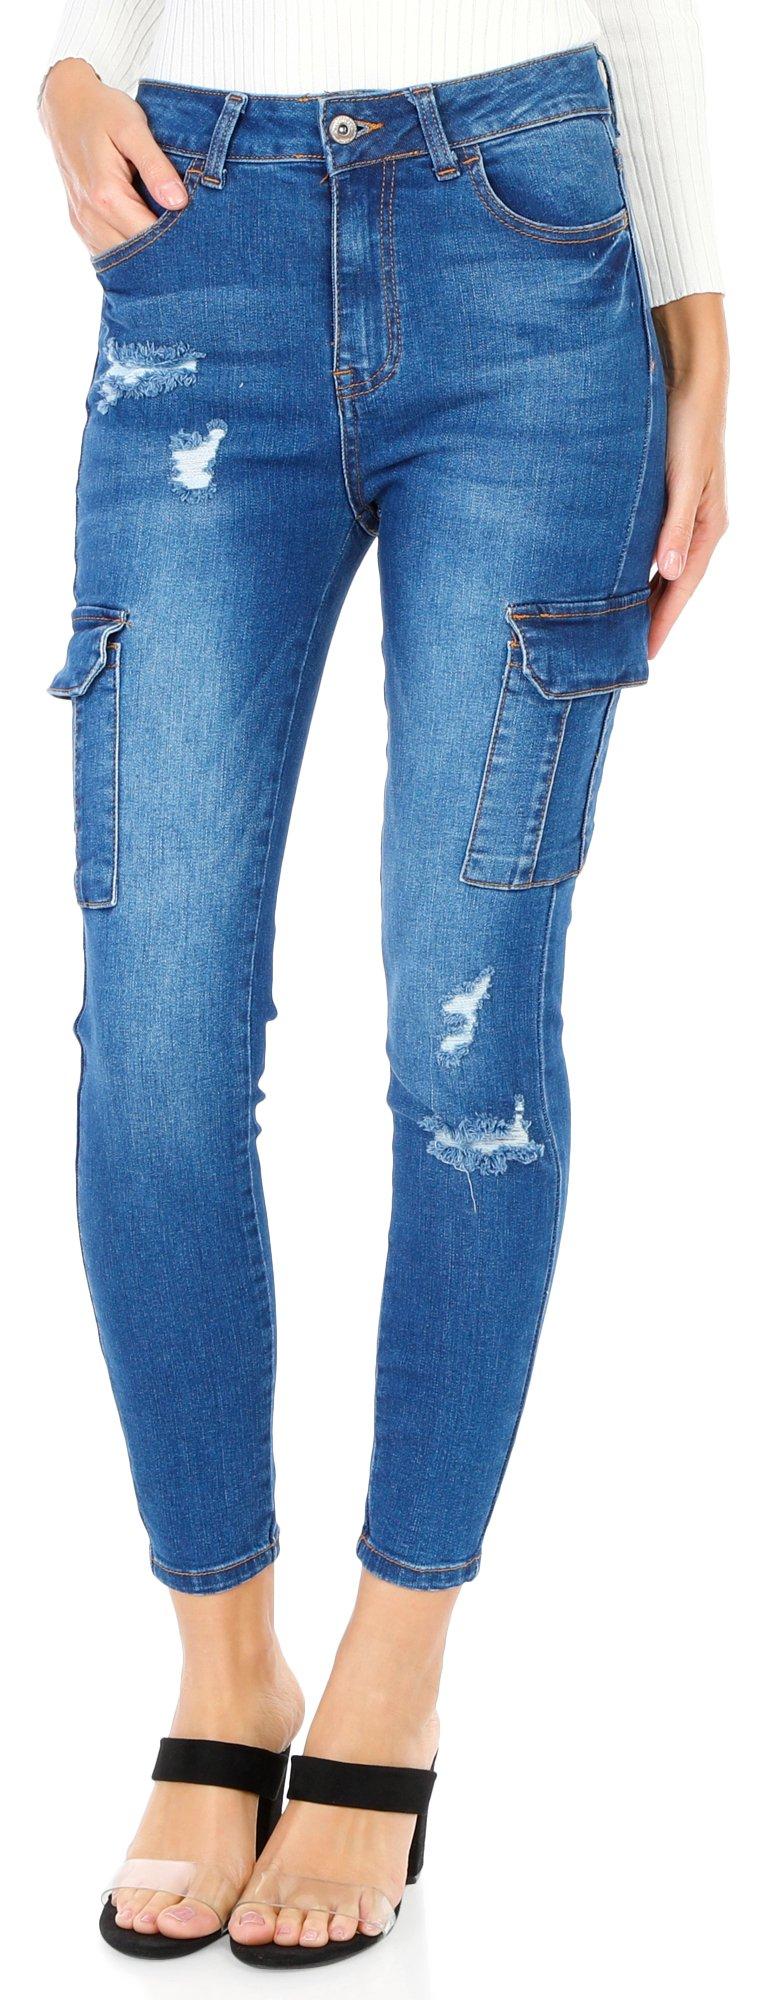 Juniors Distressed Skinny Jeans